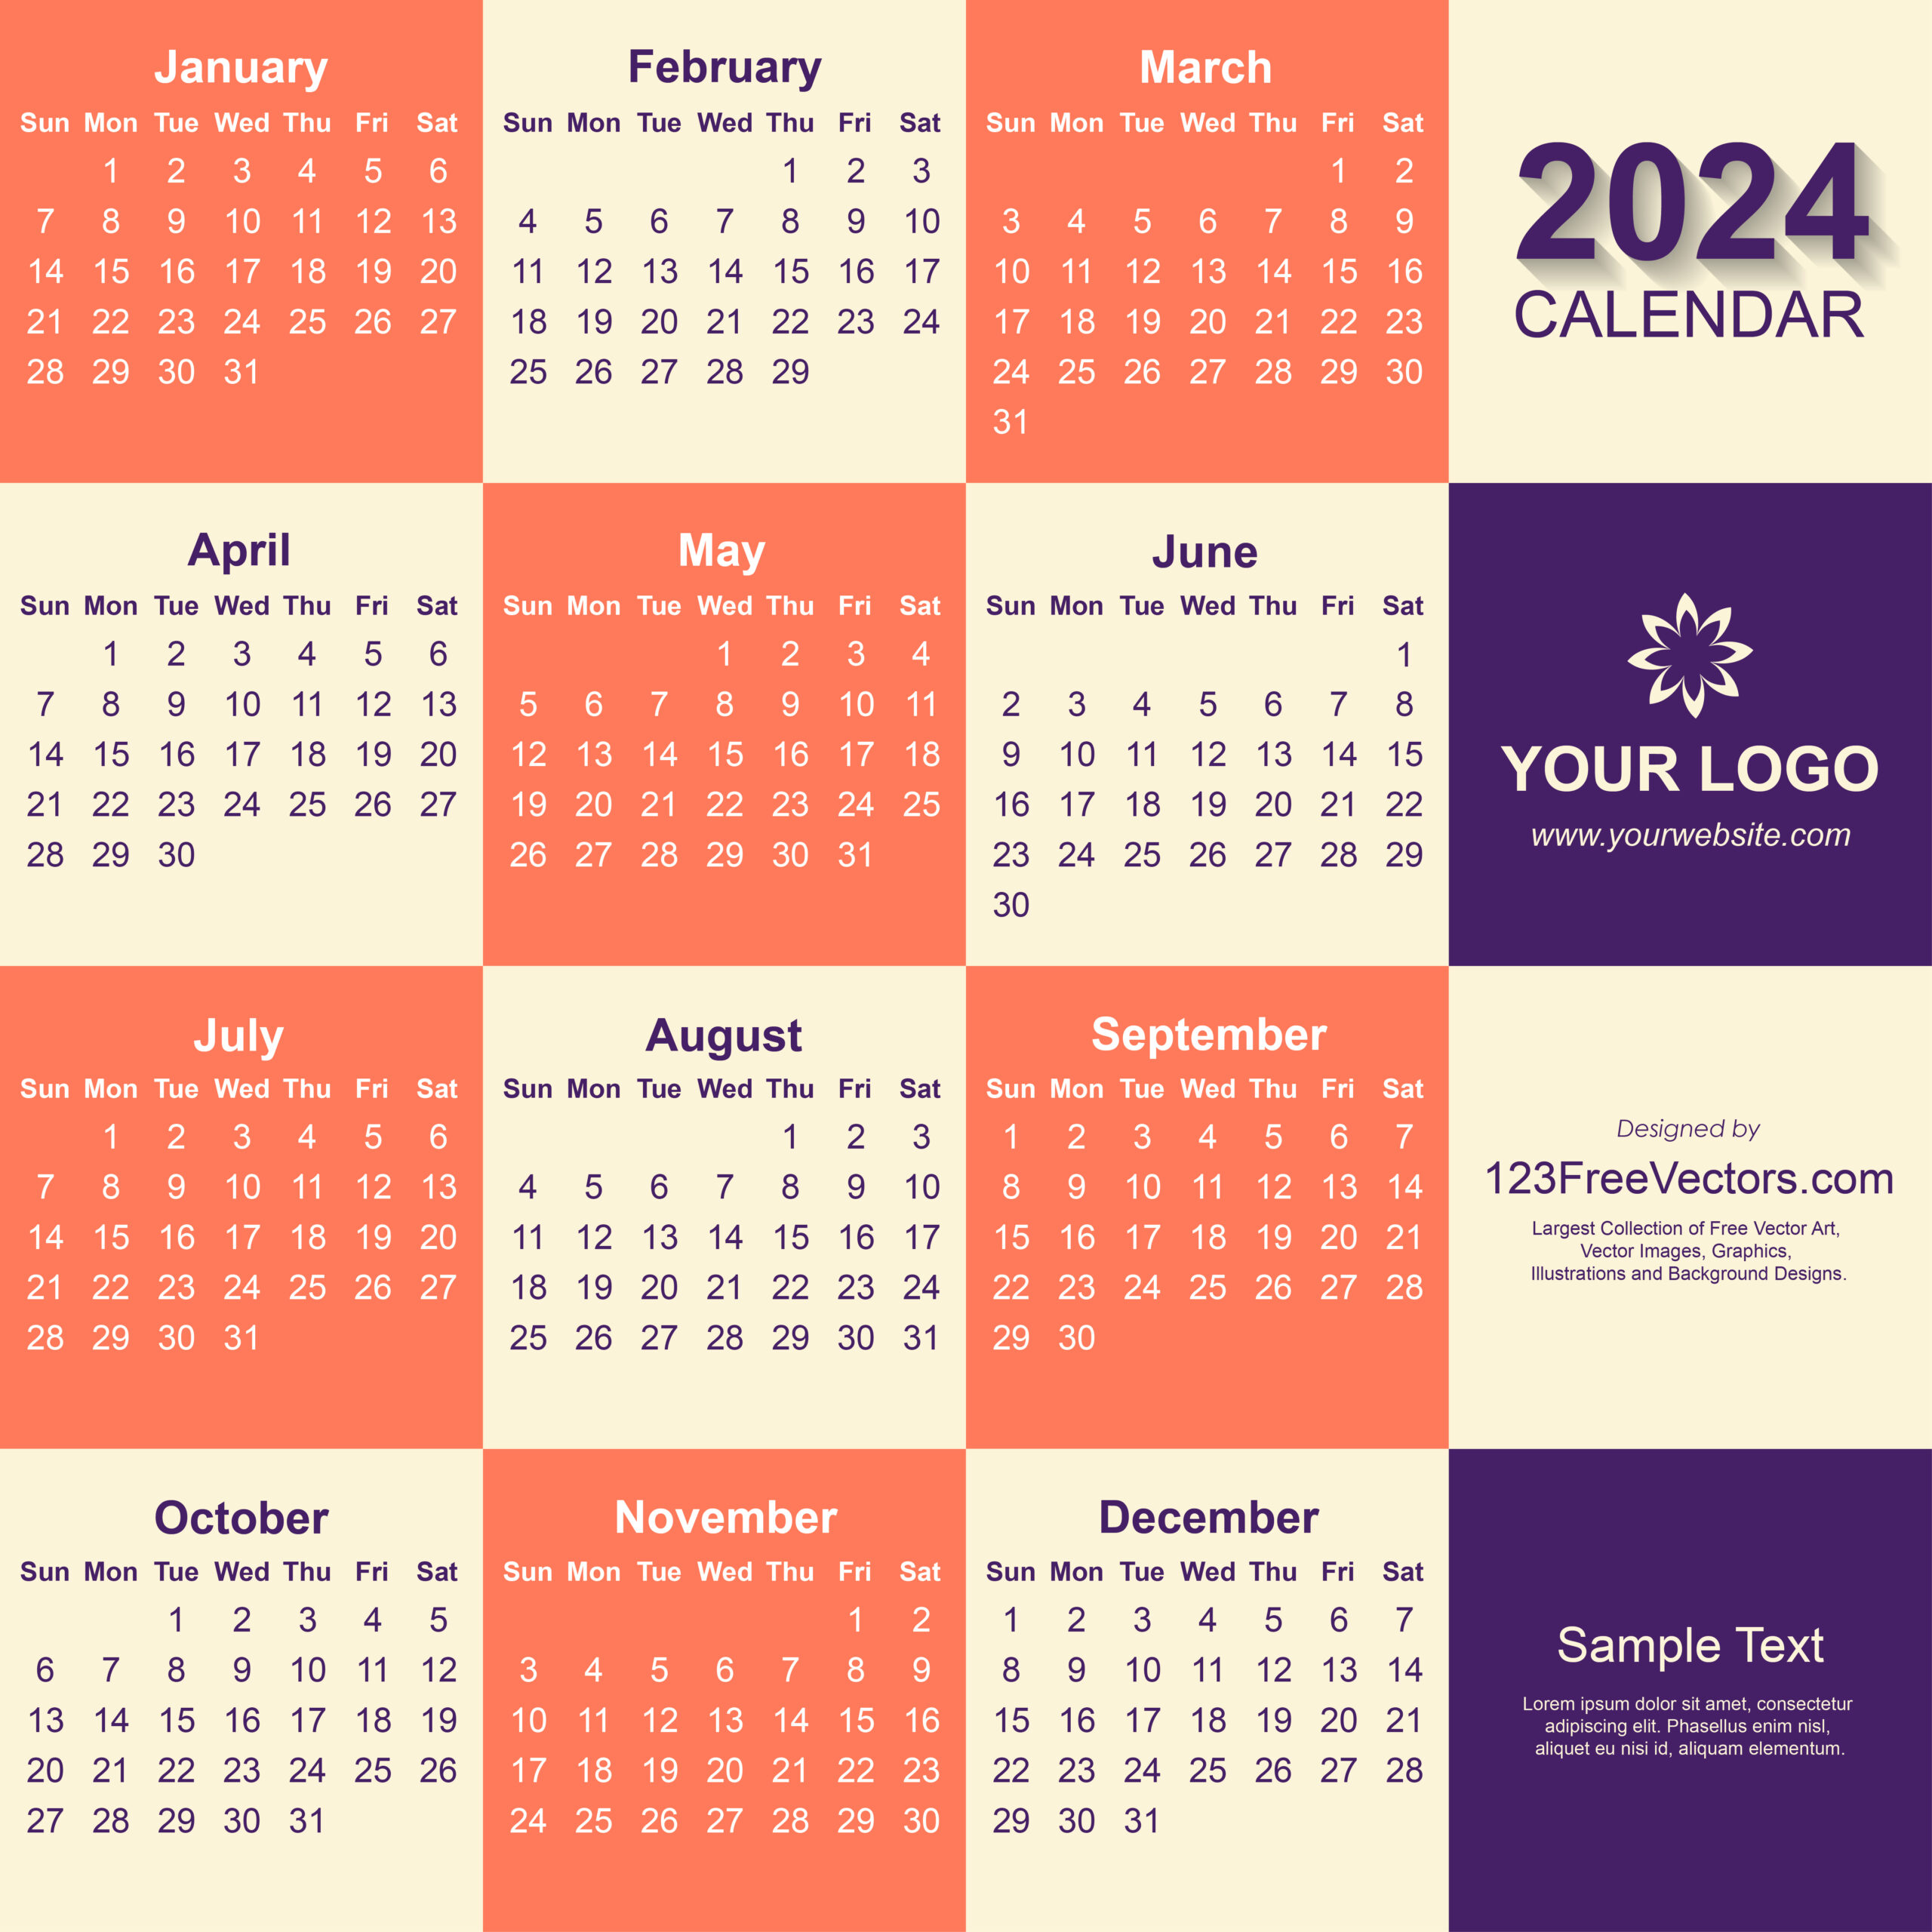 Free 2024 Calendar Pdf Free Download | Calendar 2024 Pdf Free Download